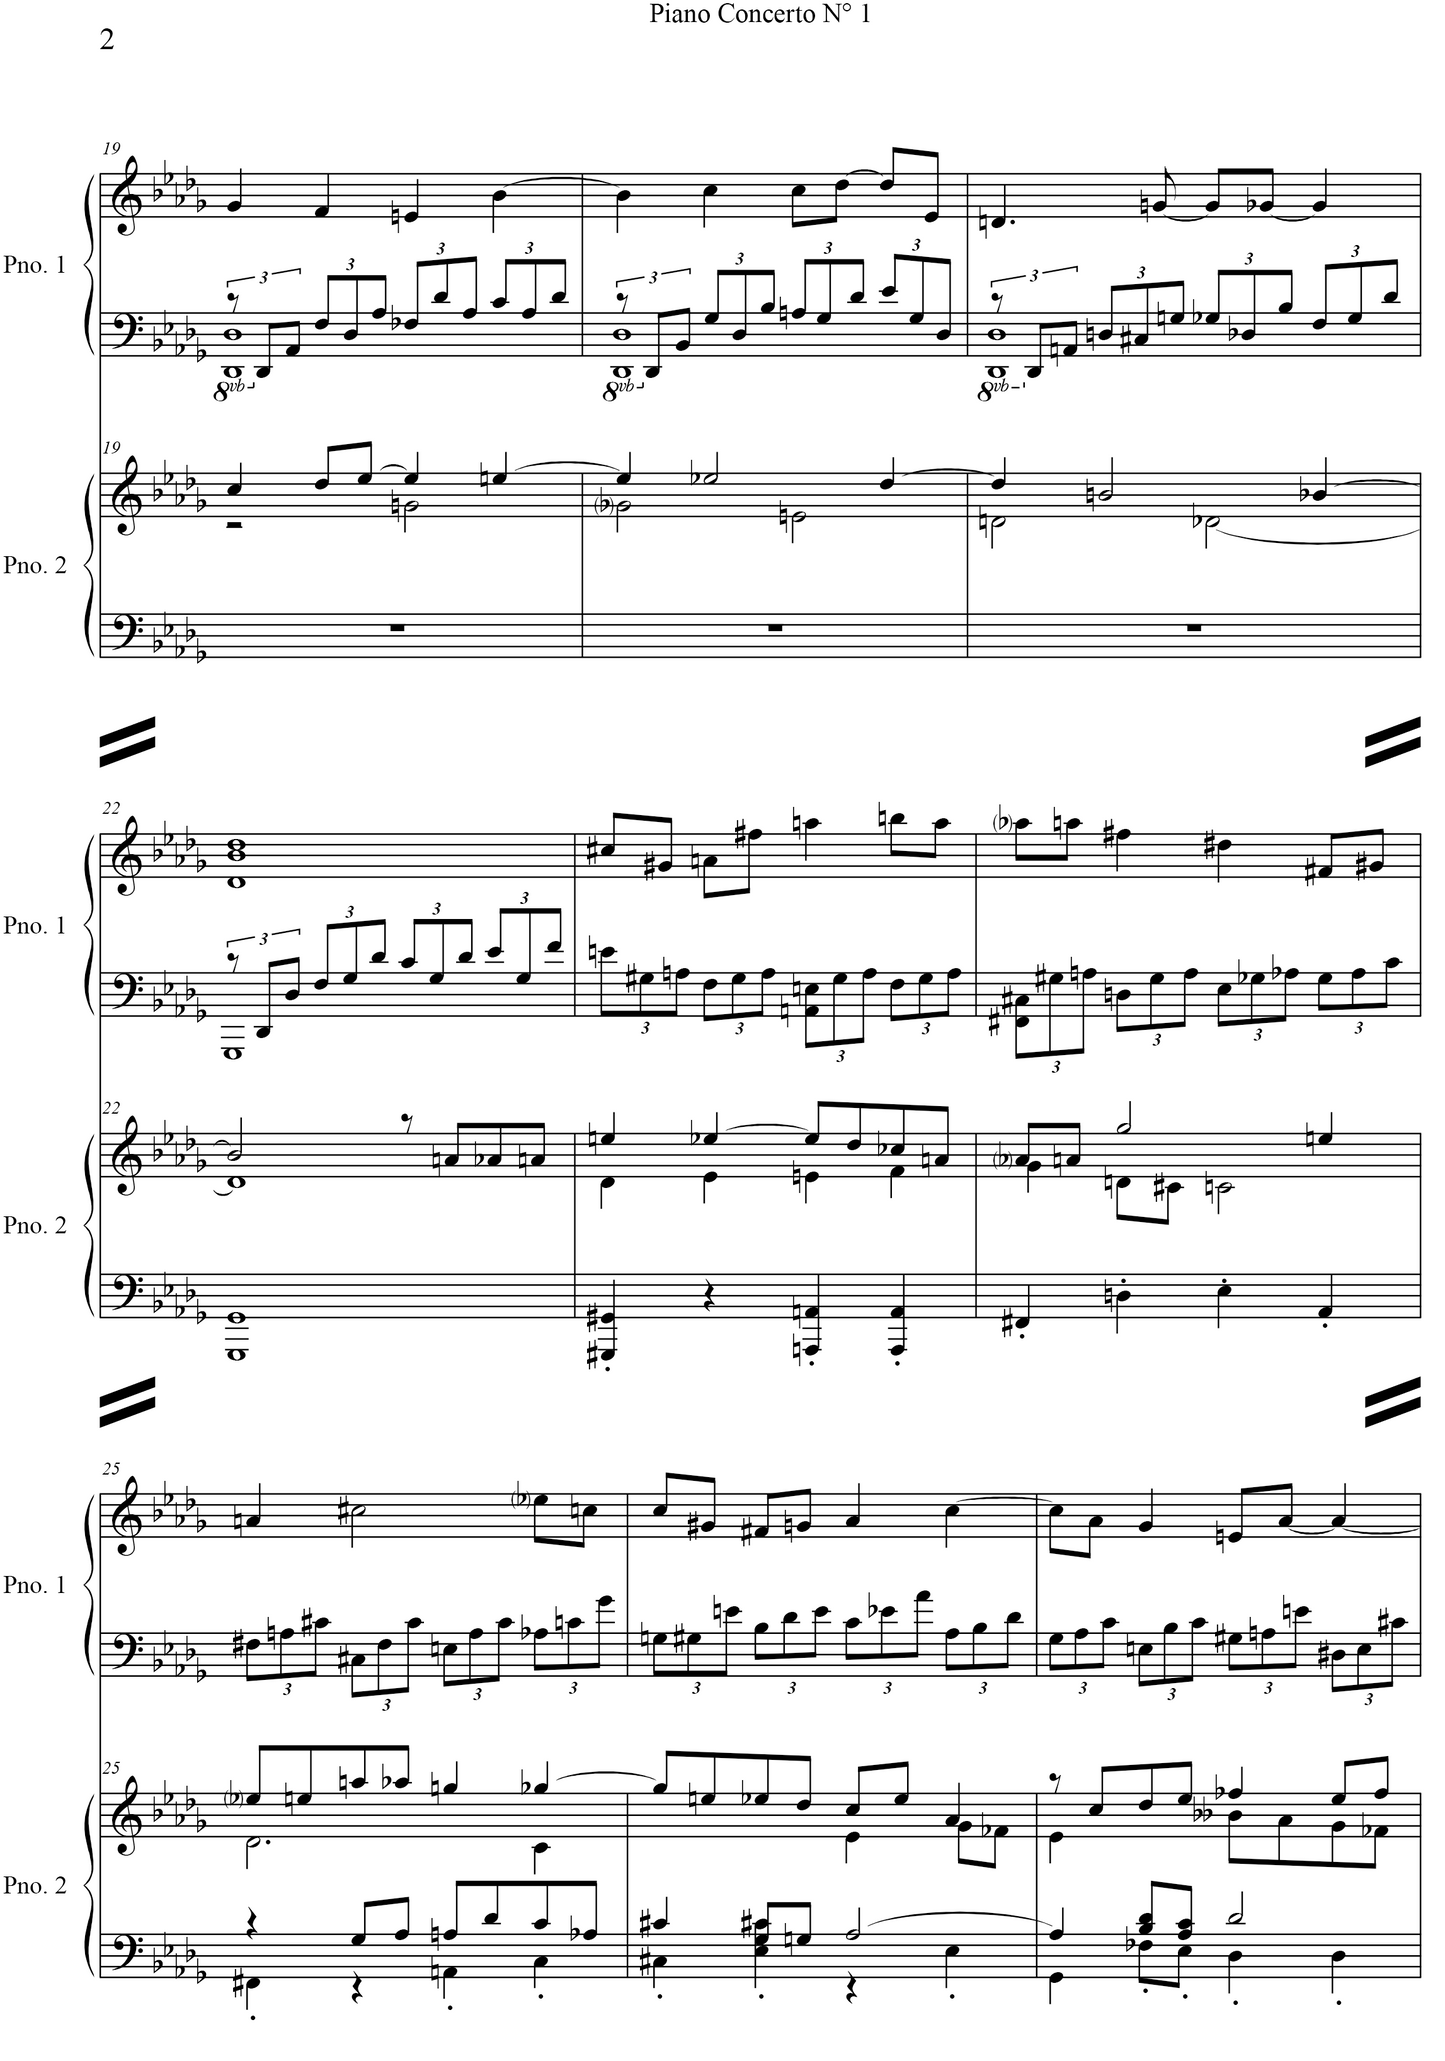 1st pianoconcerto reduction 2 pianos